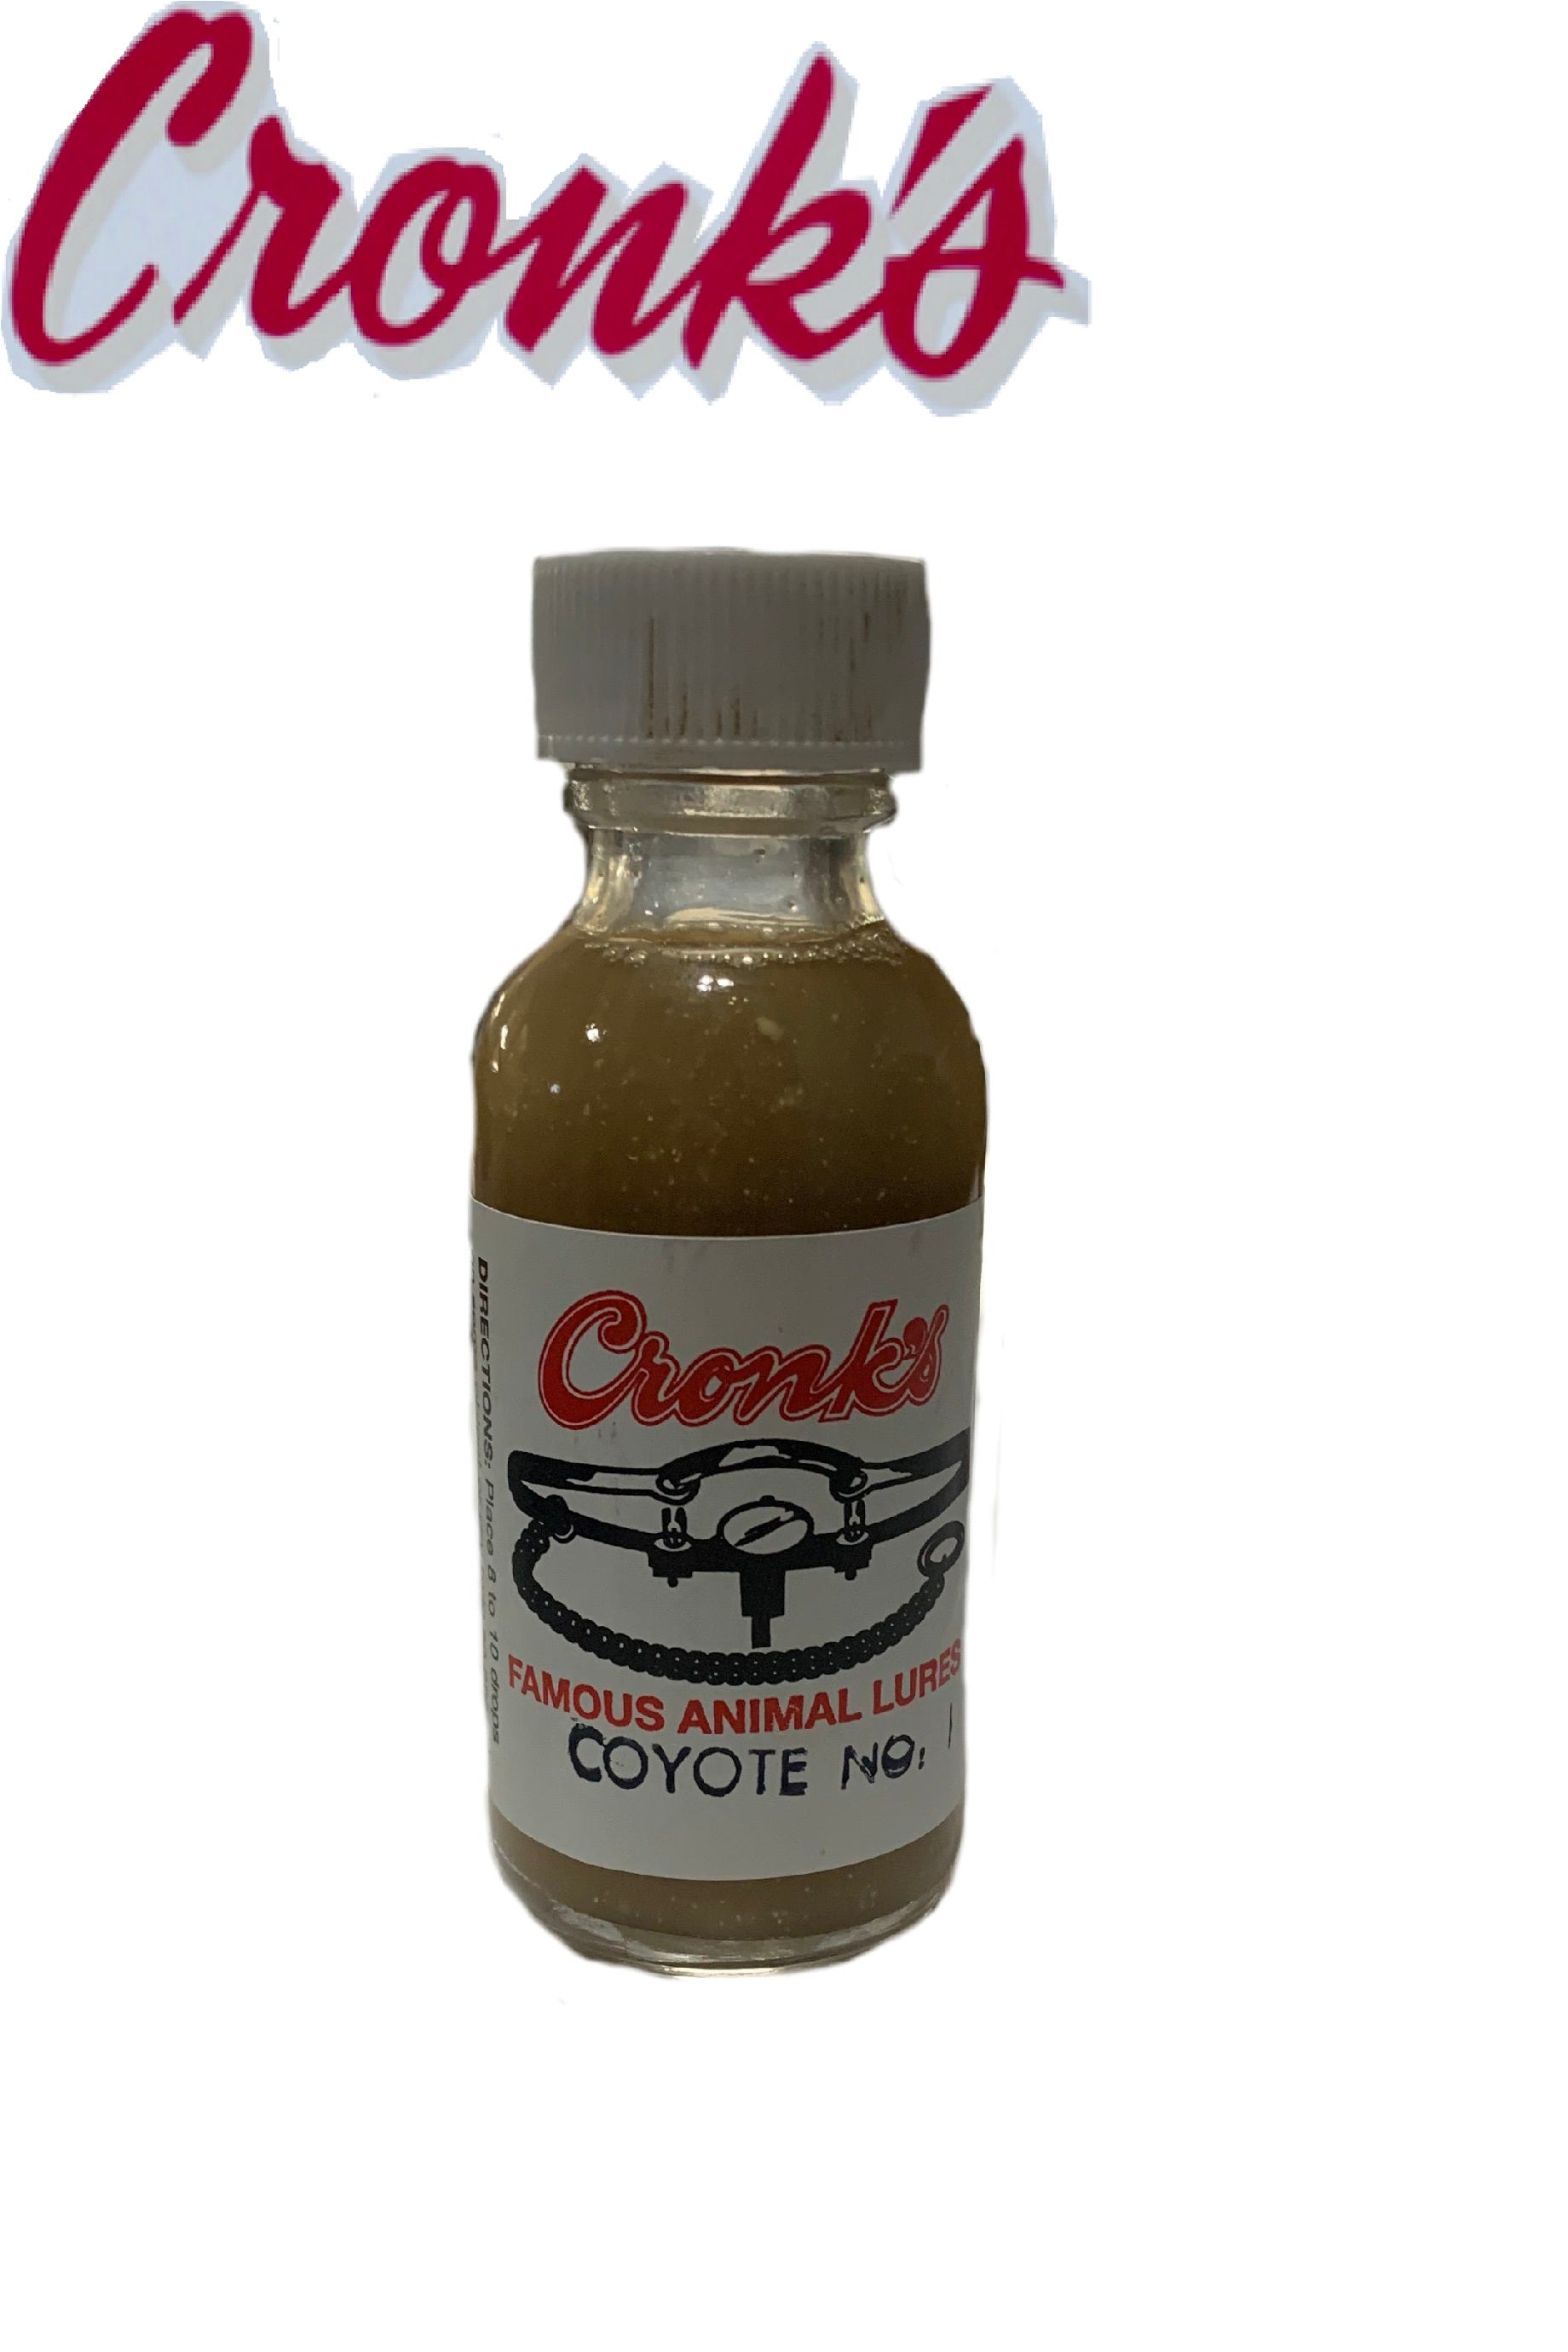 Cronk's Coyote No.1